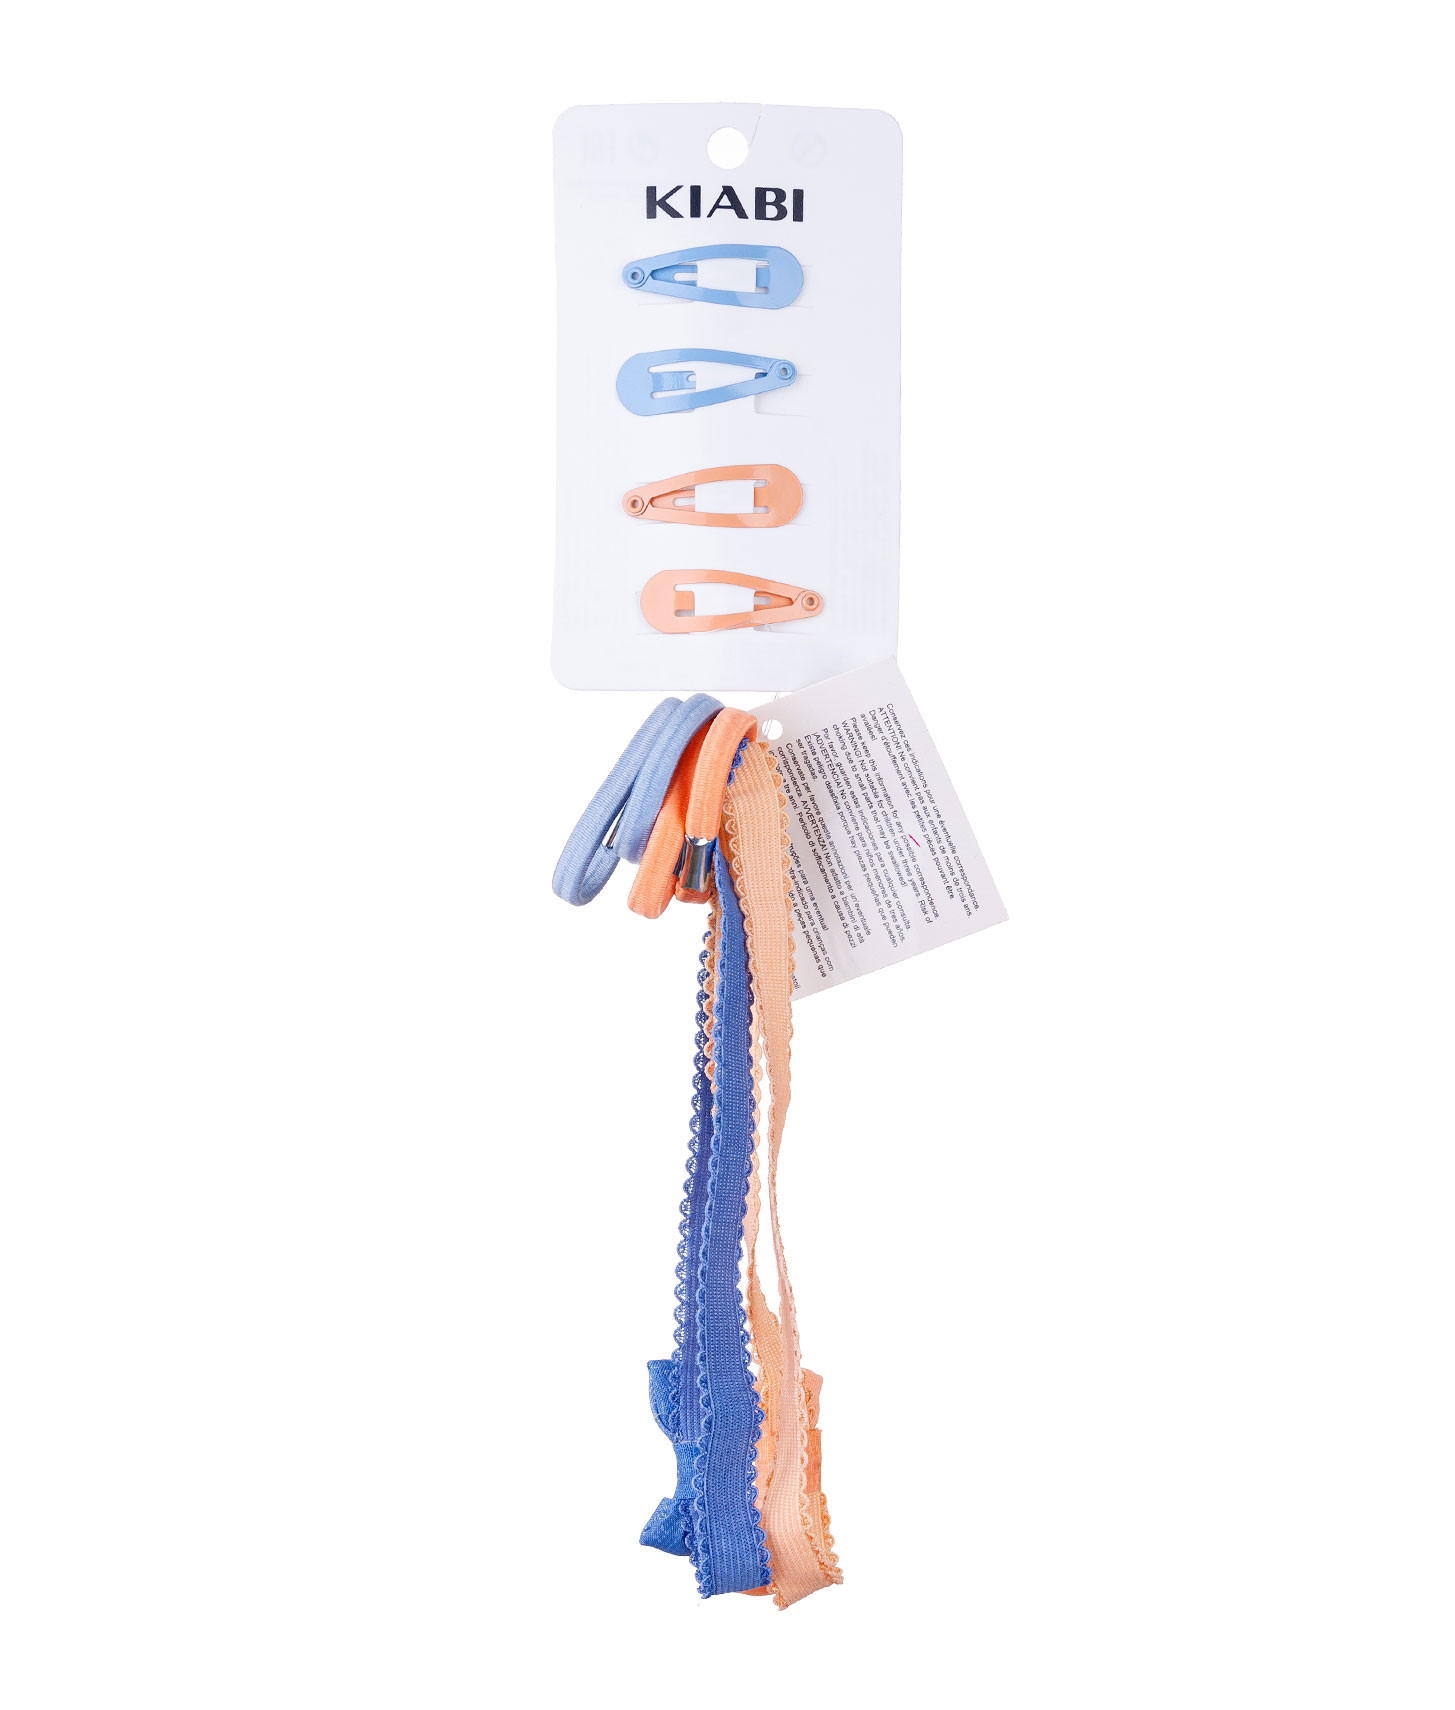 Комплект заколок, резинок и повязок для волос Kiabi